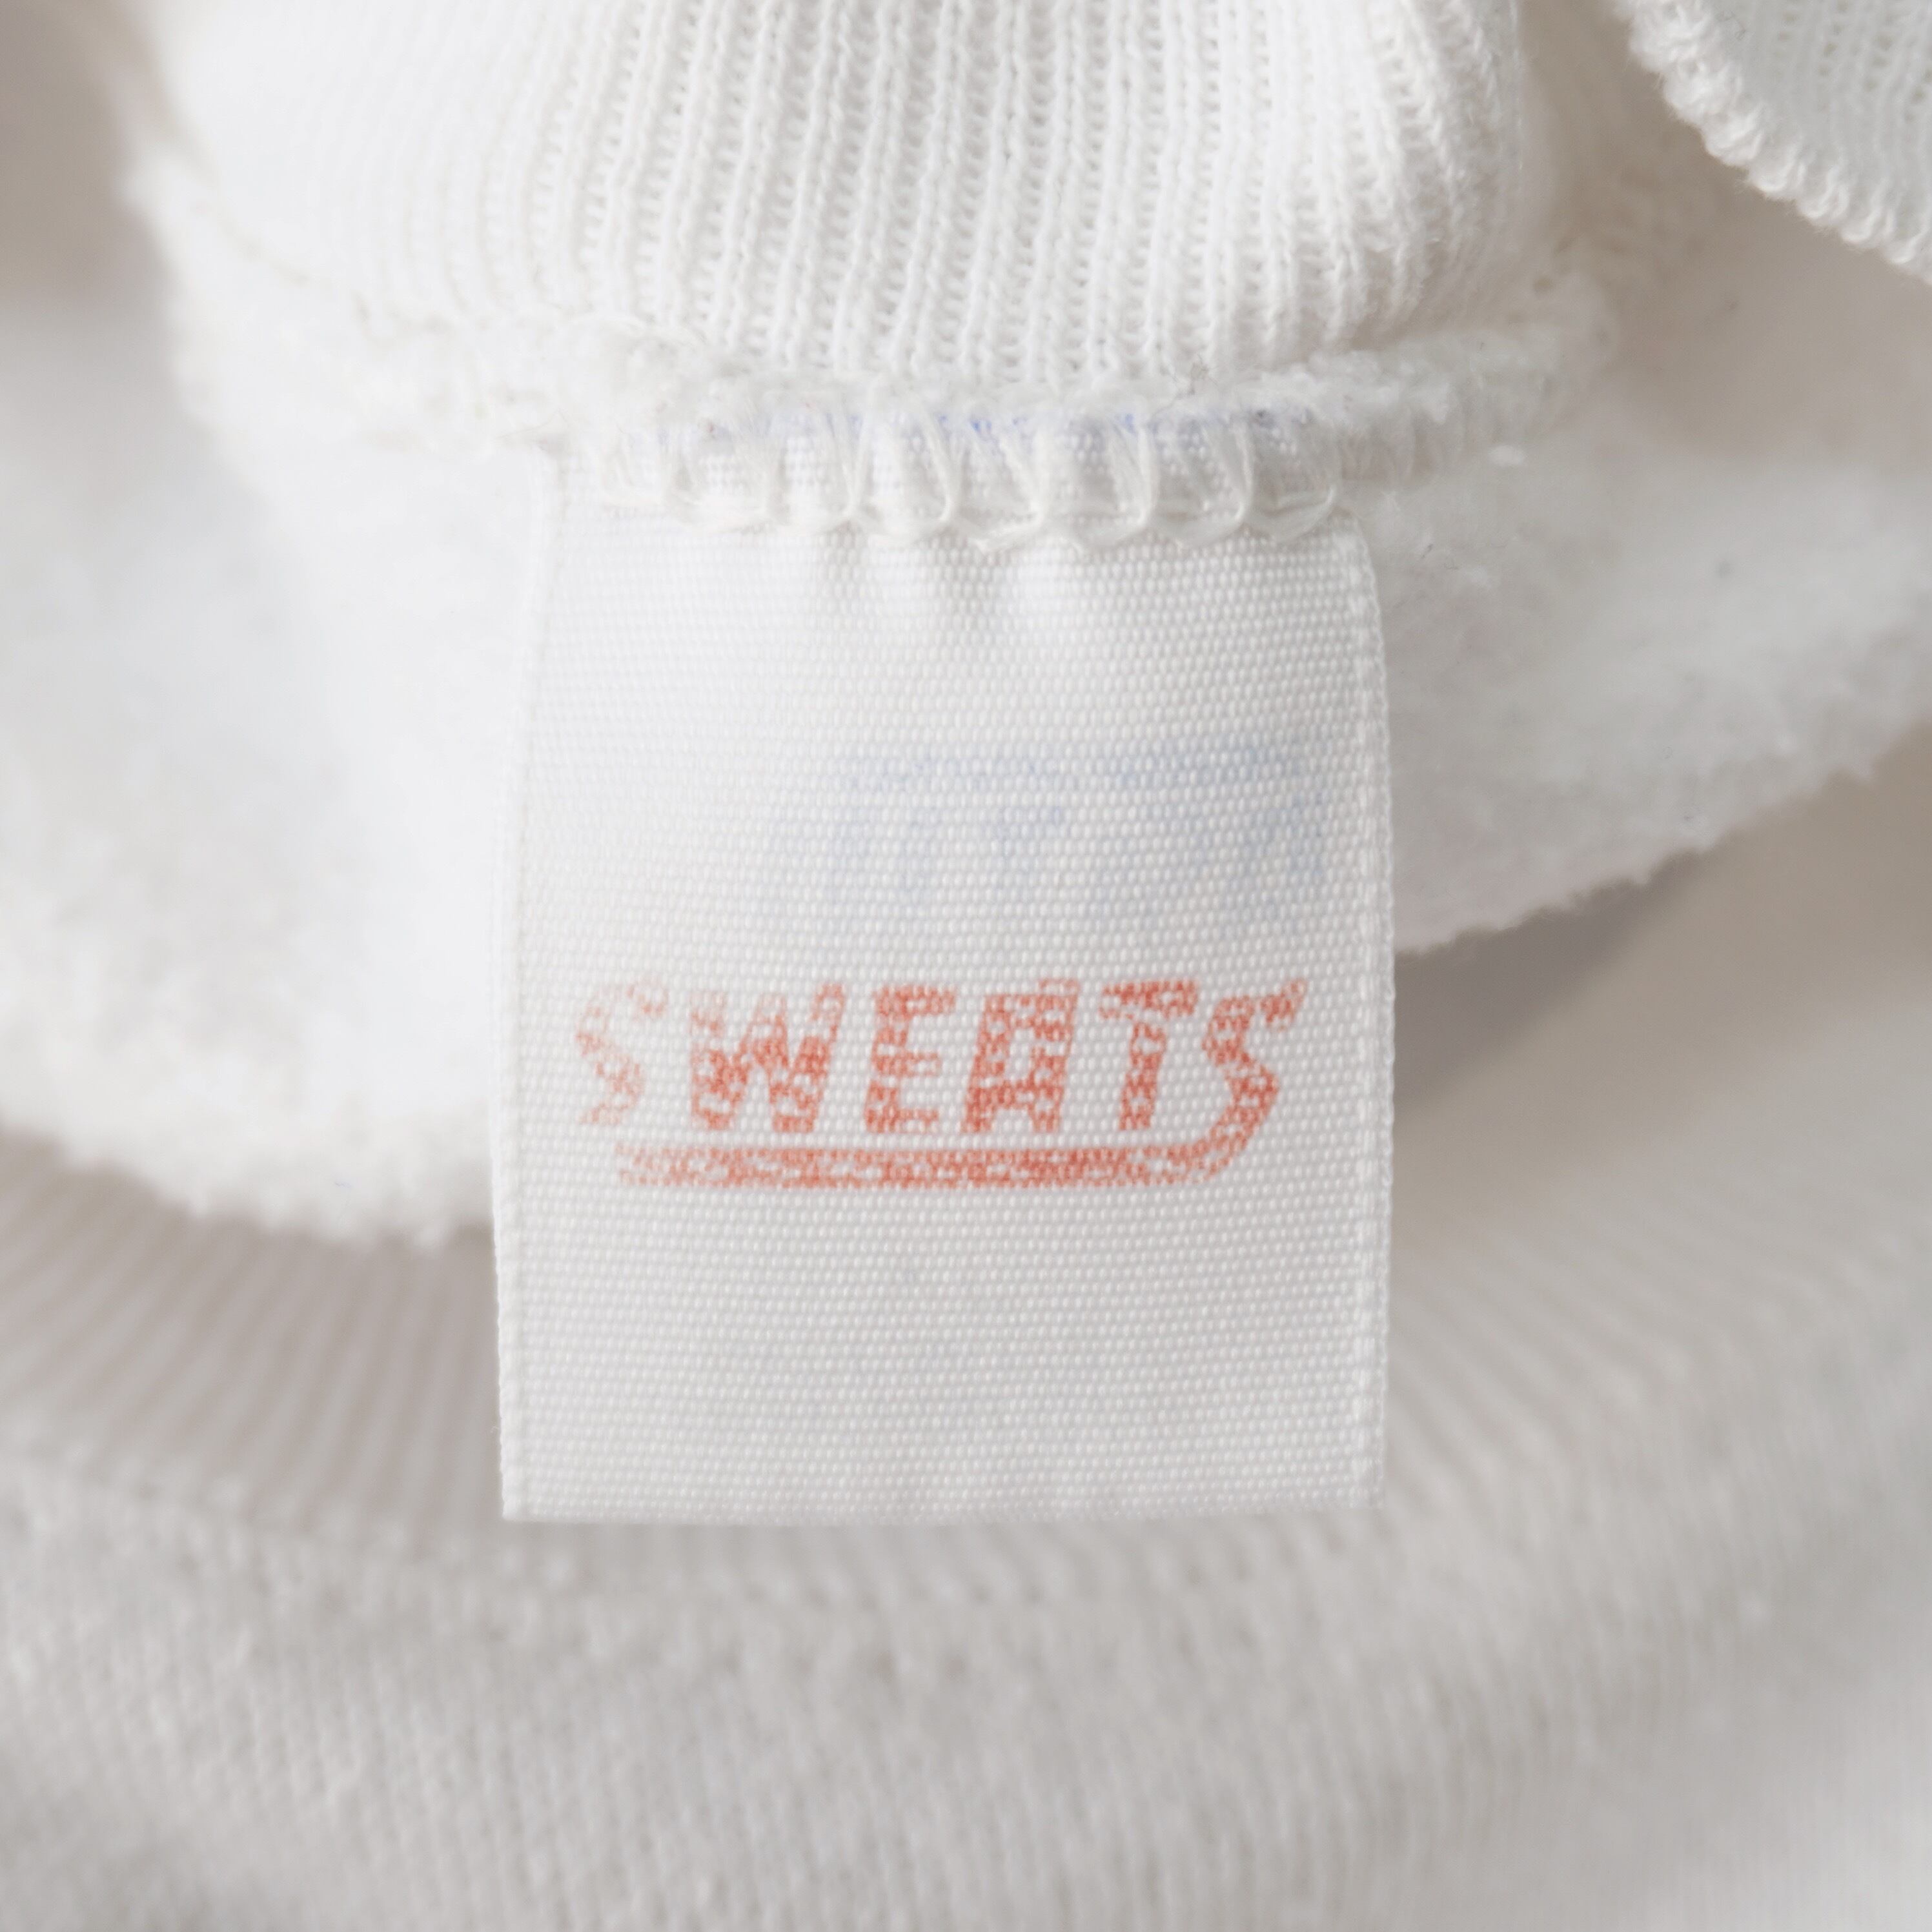 ULTRA SWEATS Sweatshirts SWT2328